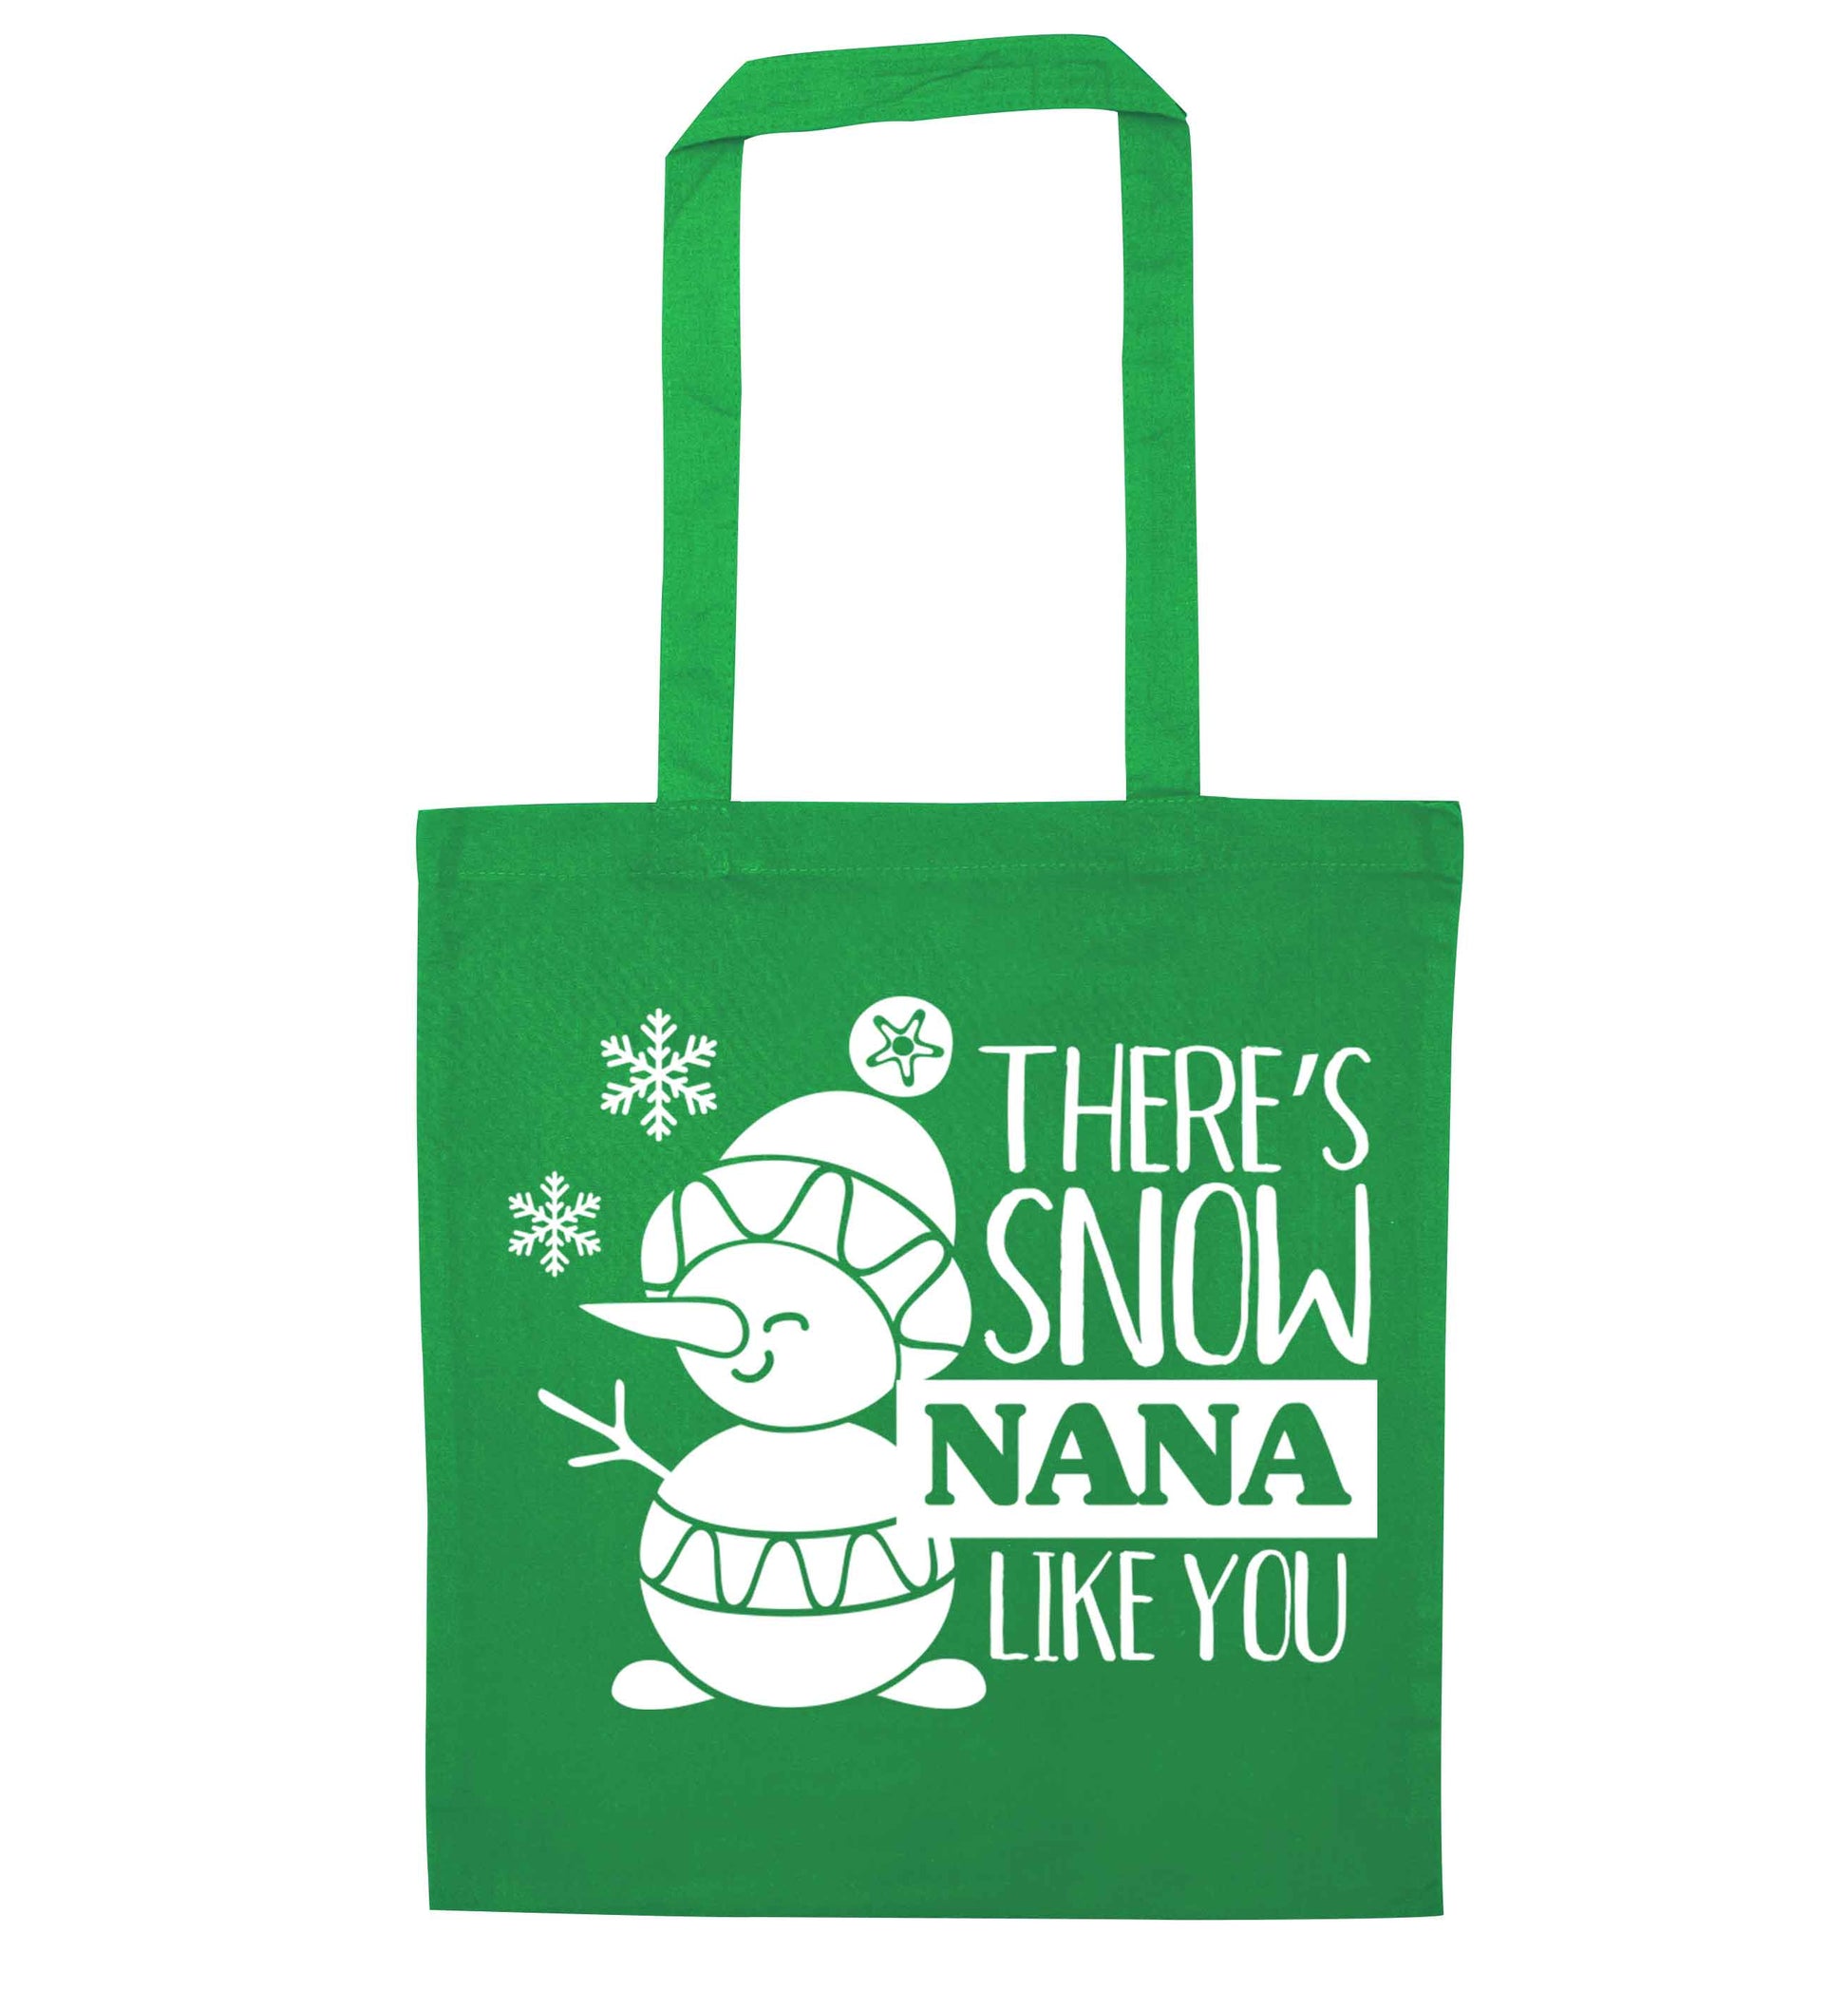 There's snow nana like you green tote bag